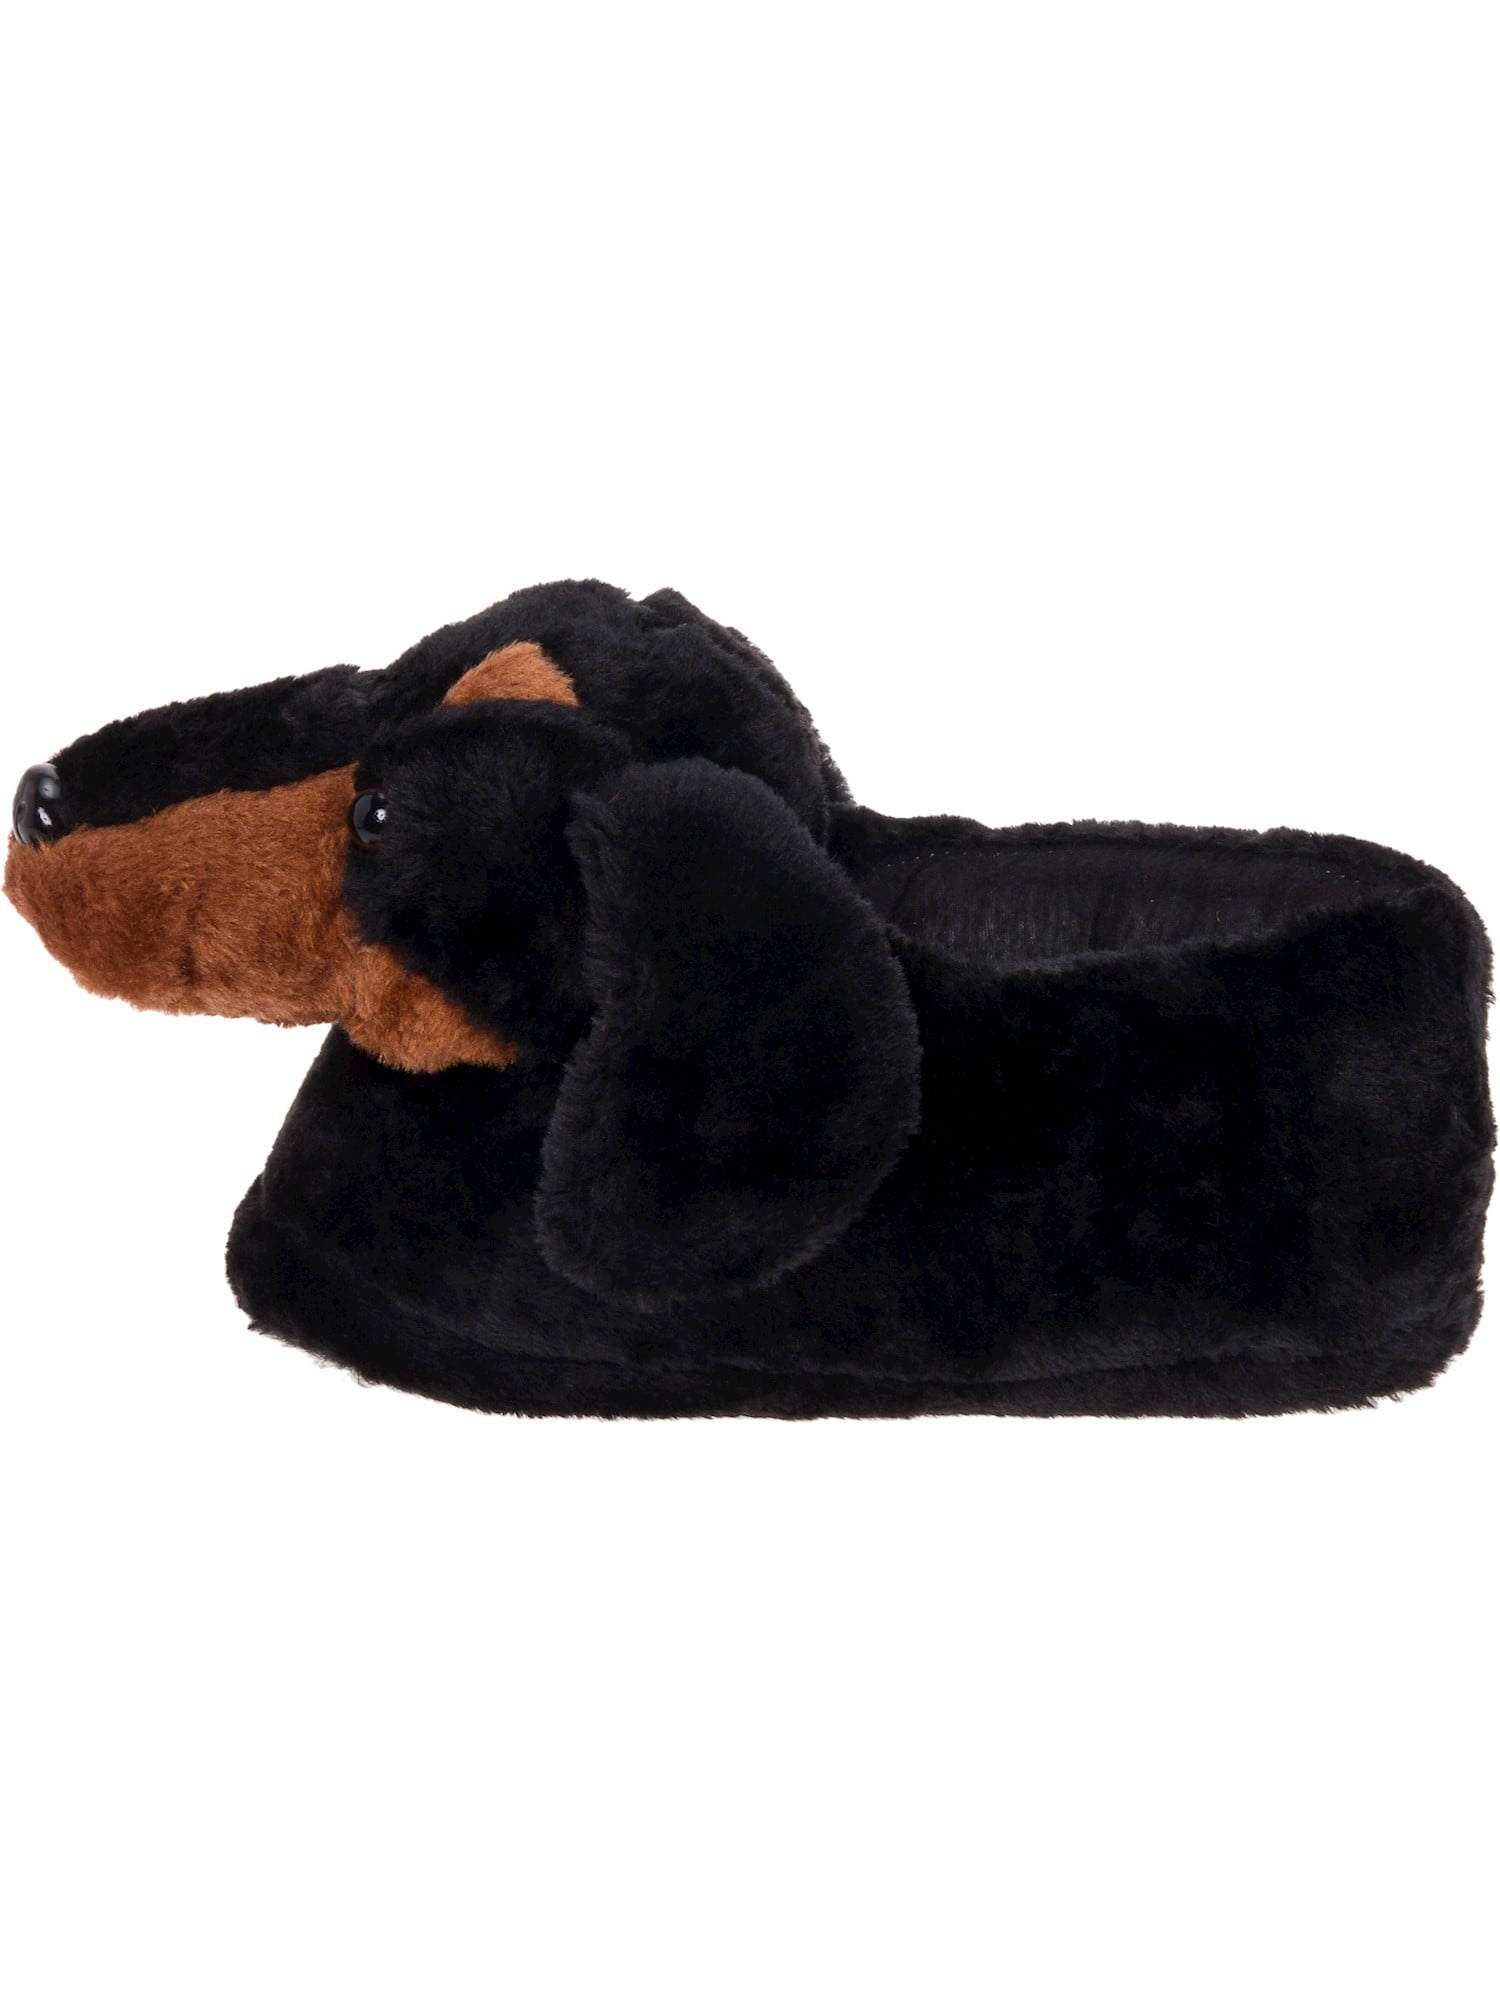 walmart dachshund slippers